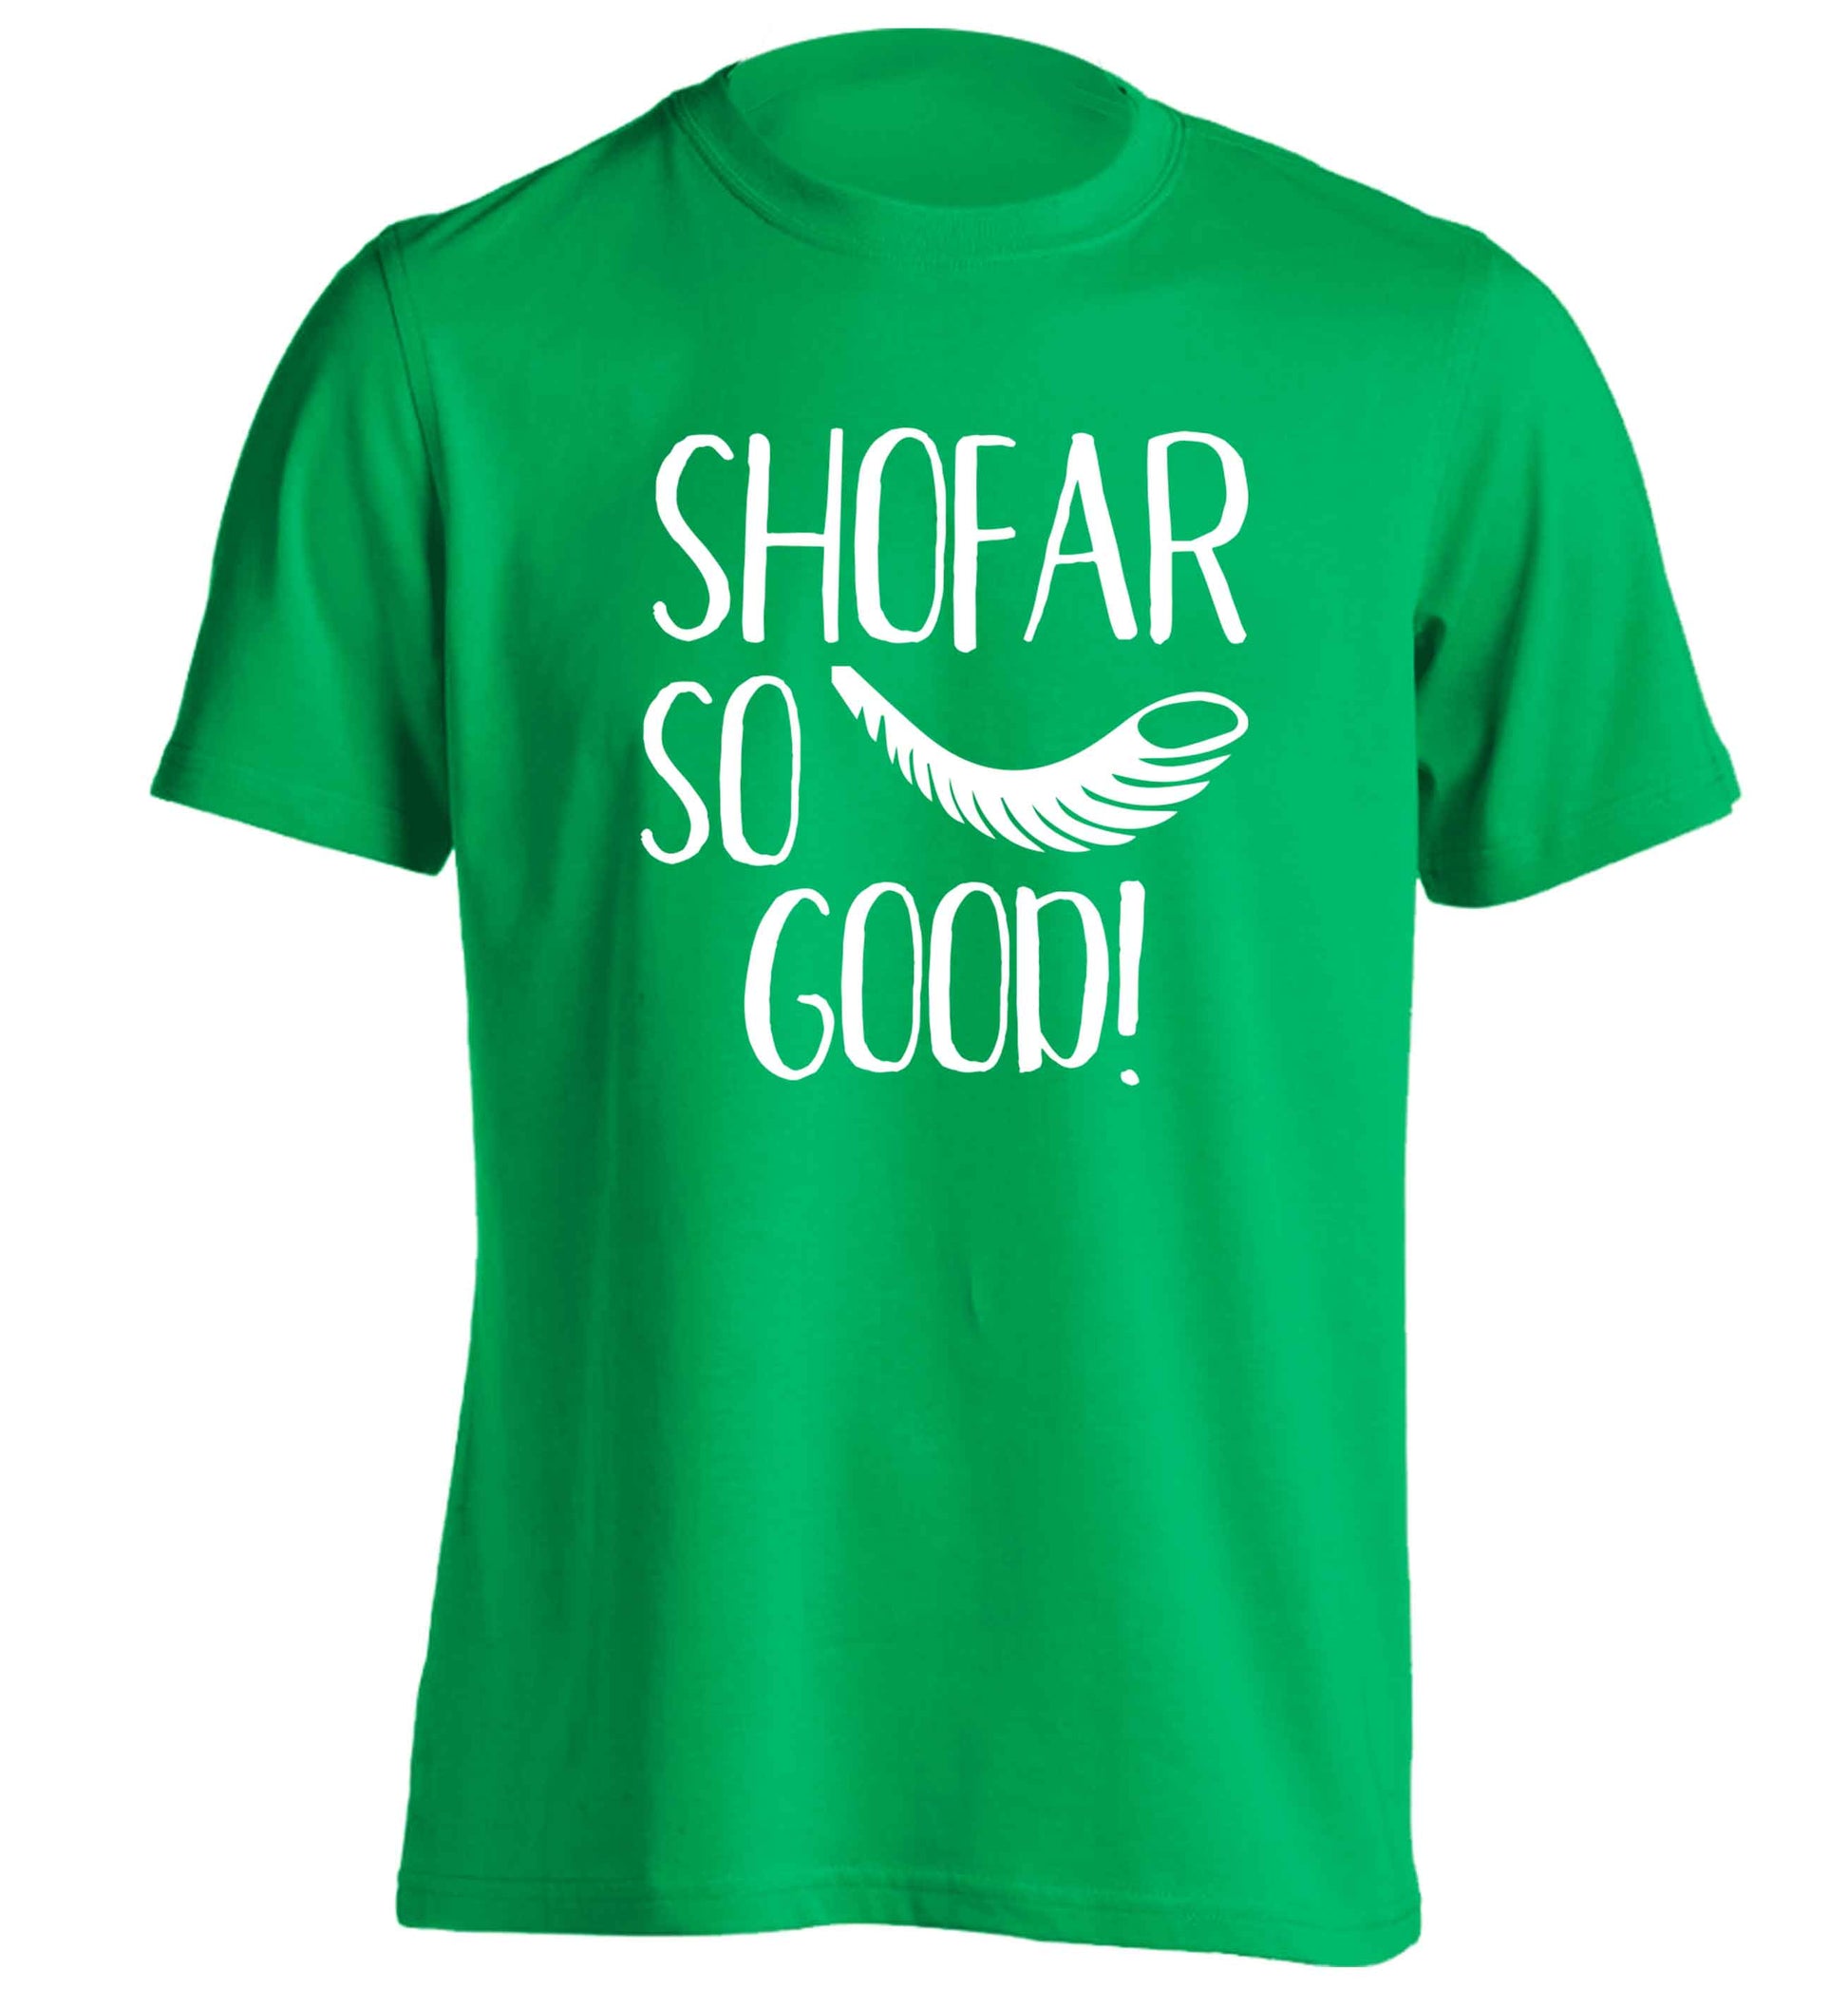 Shofar so good! adults unisex green Tshirt 2XL